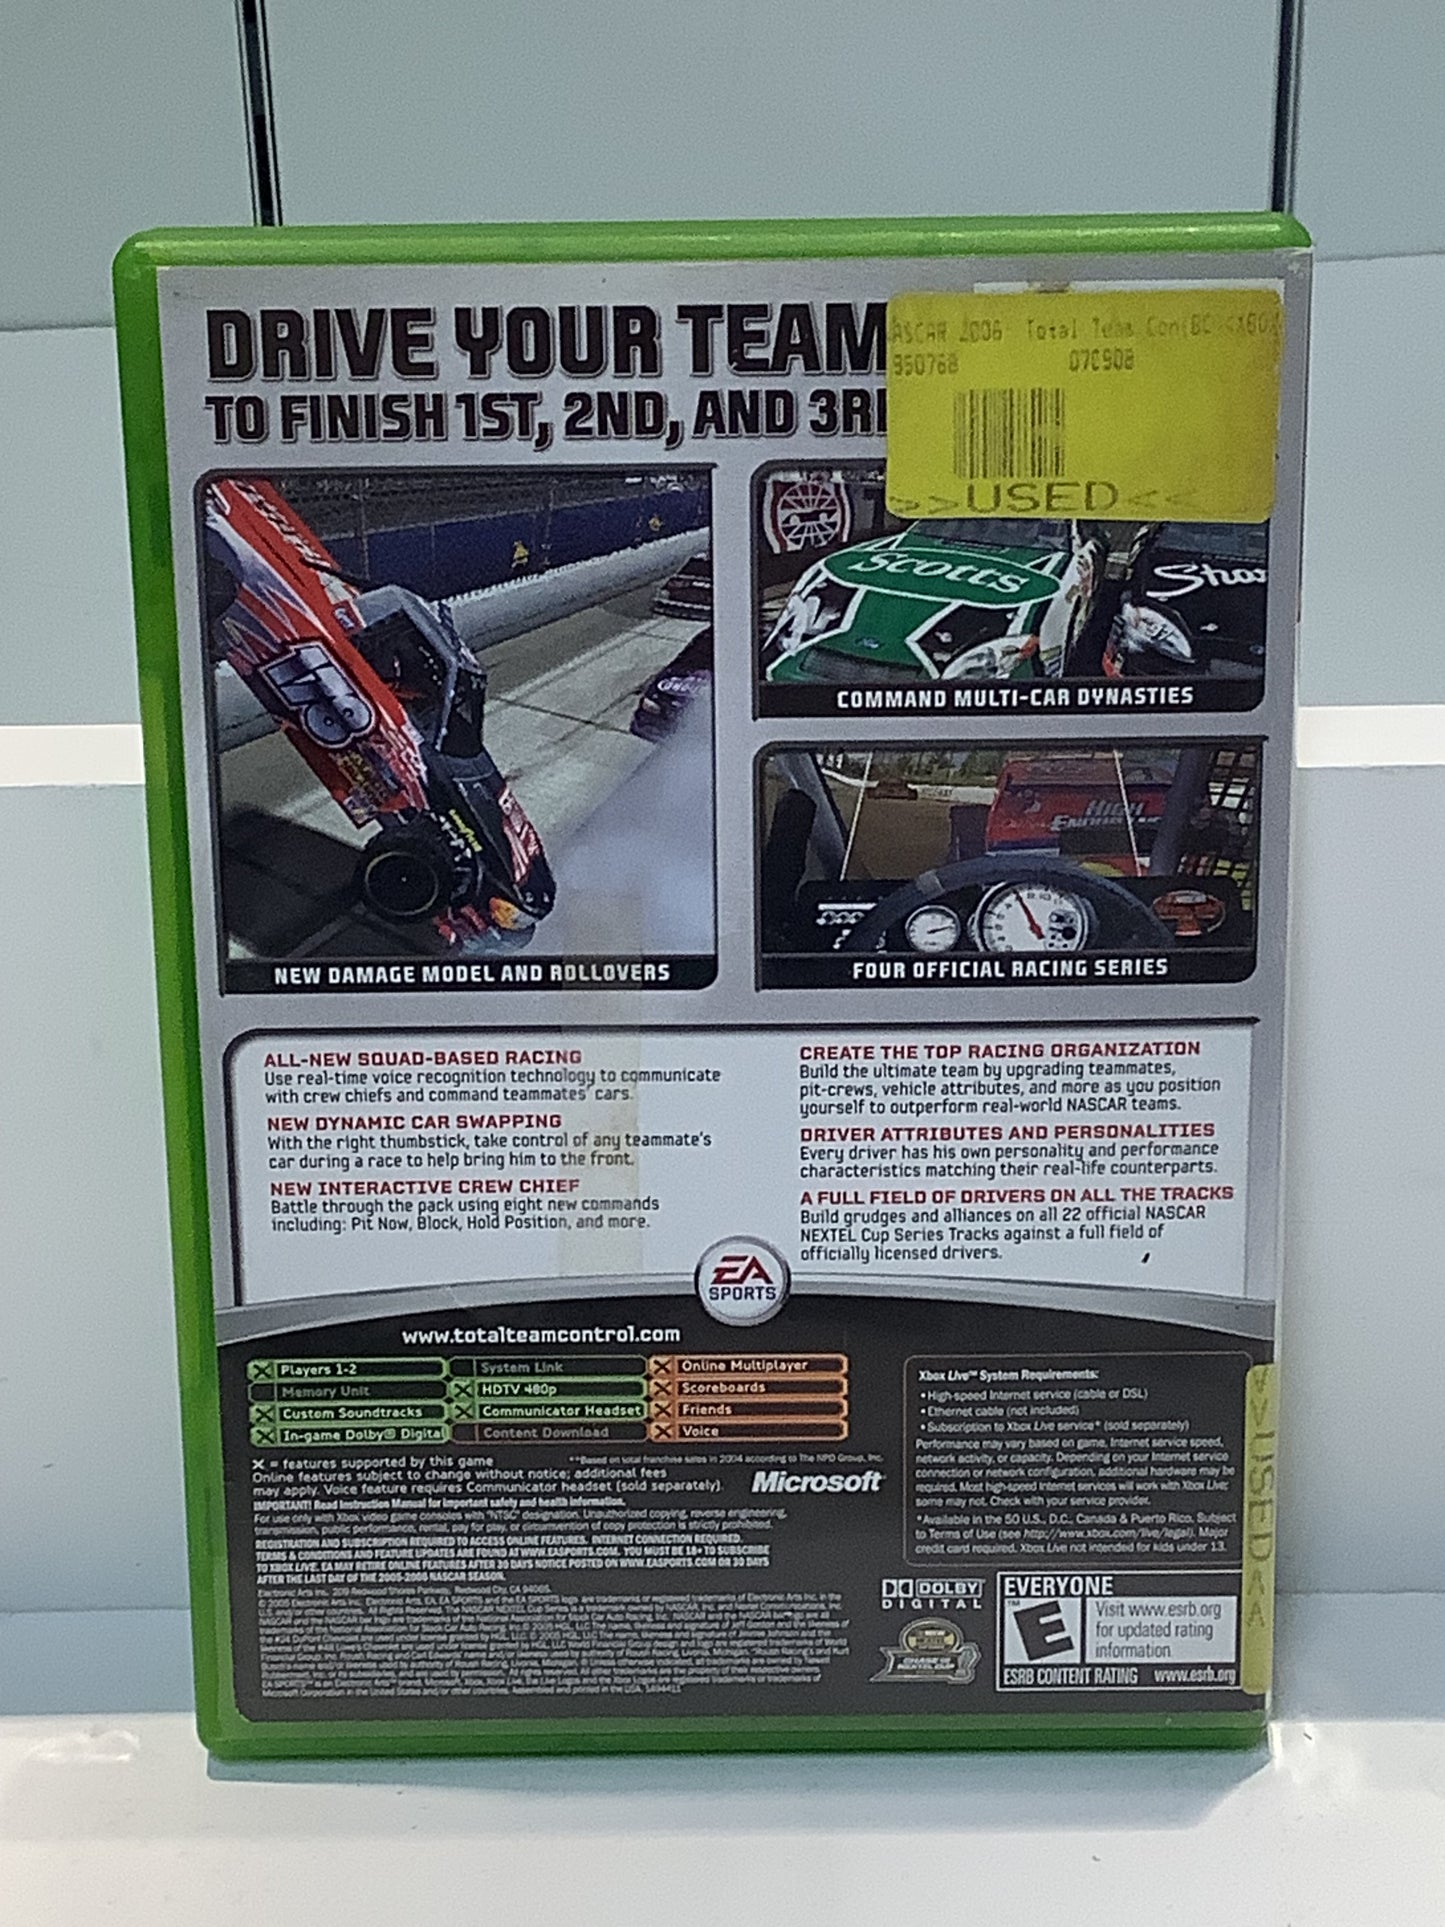 NASCAR 06 Total Team Control - Xbox